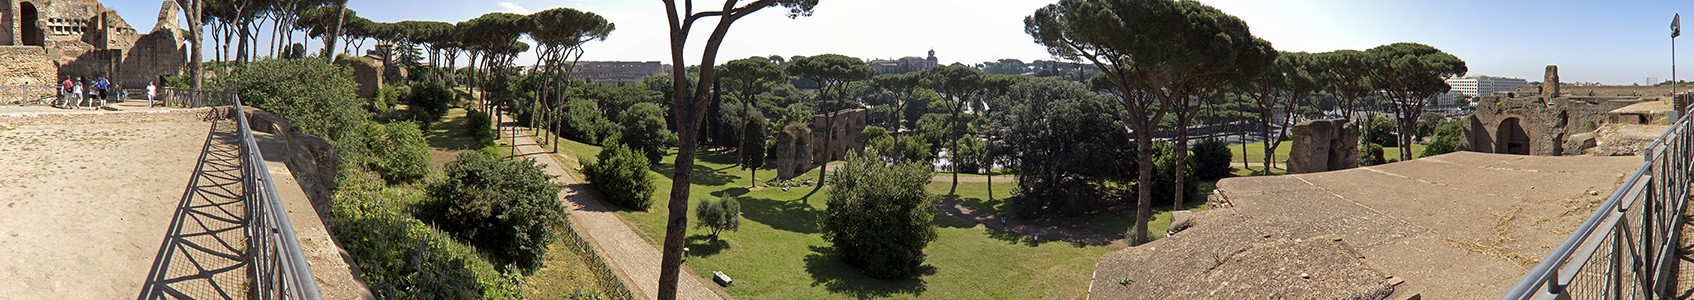 Palatin, Kolosseum (Amphitheatrum Flavium), Aqua Claudia (Arcus Neroniani), Palatin Rom